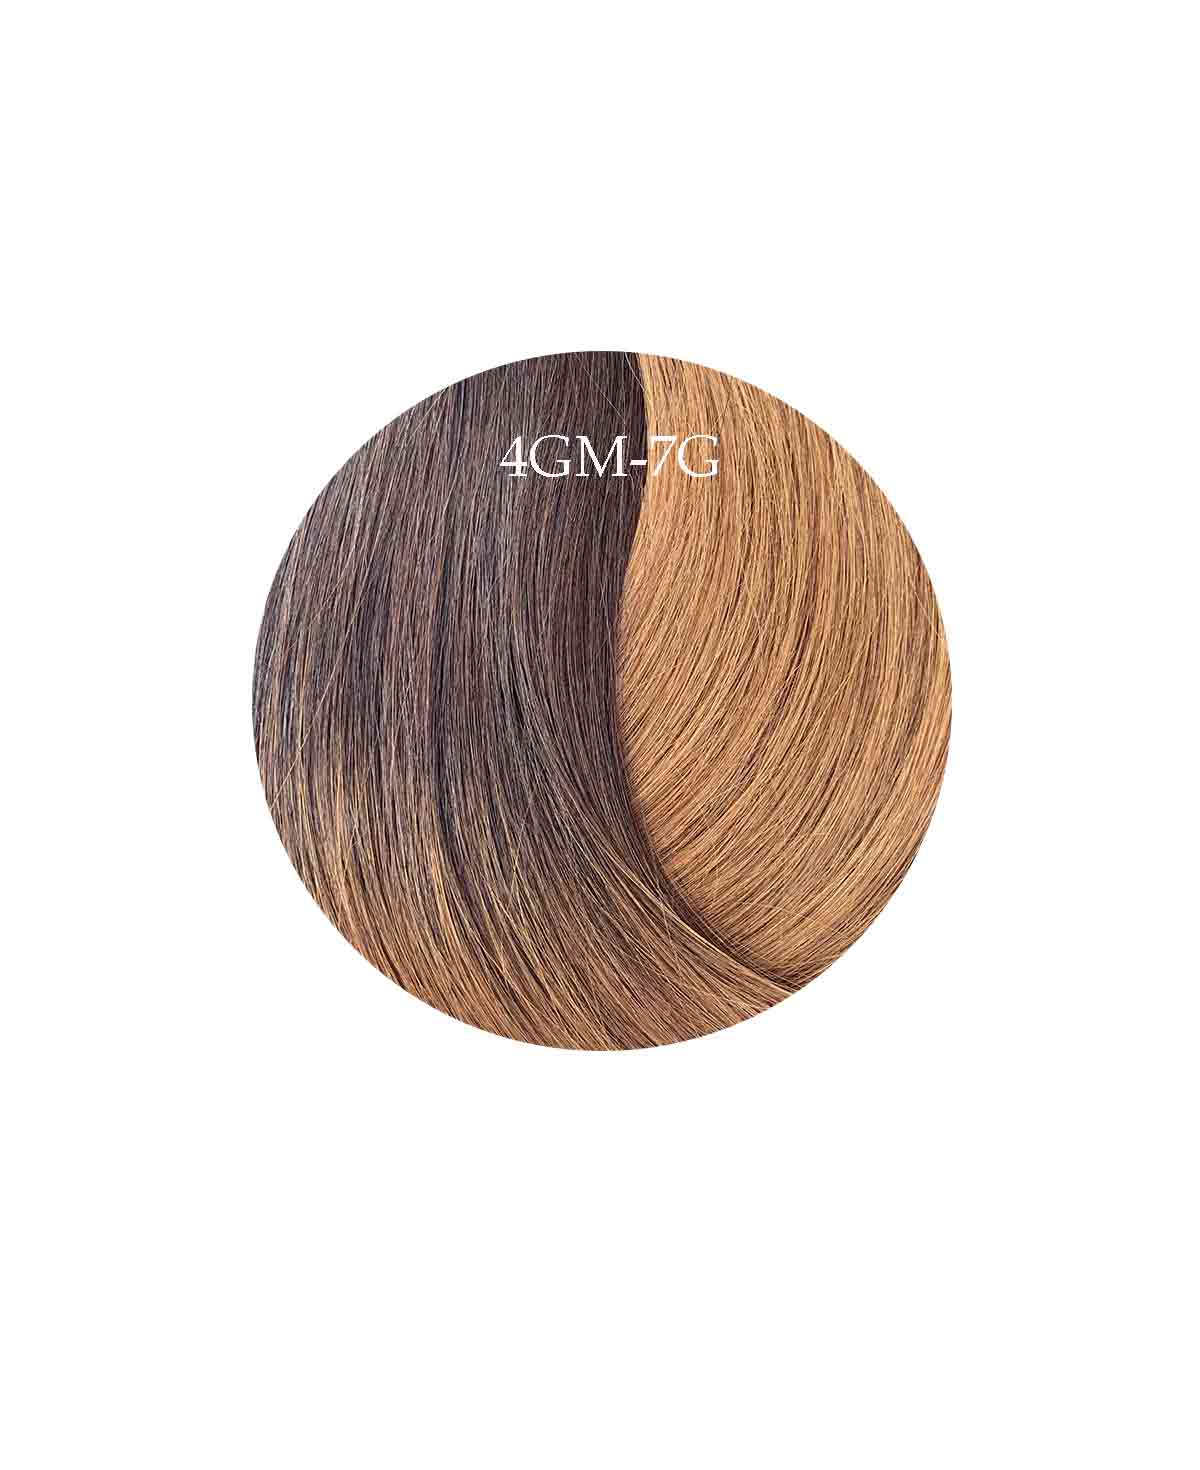 Showpony 45-50cm (20") 7 Piece Clip In Hair Extension - 4GM-7G Warm Mocha Melt Ombre